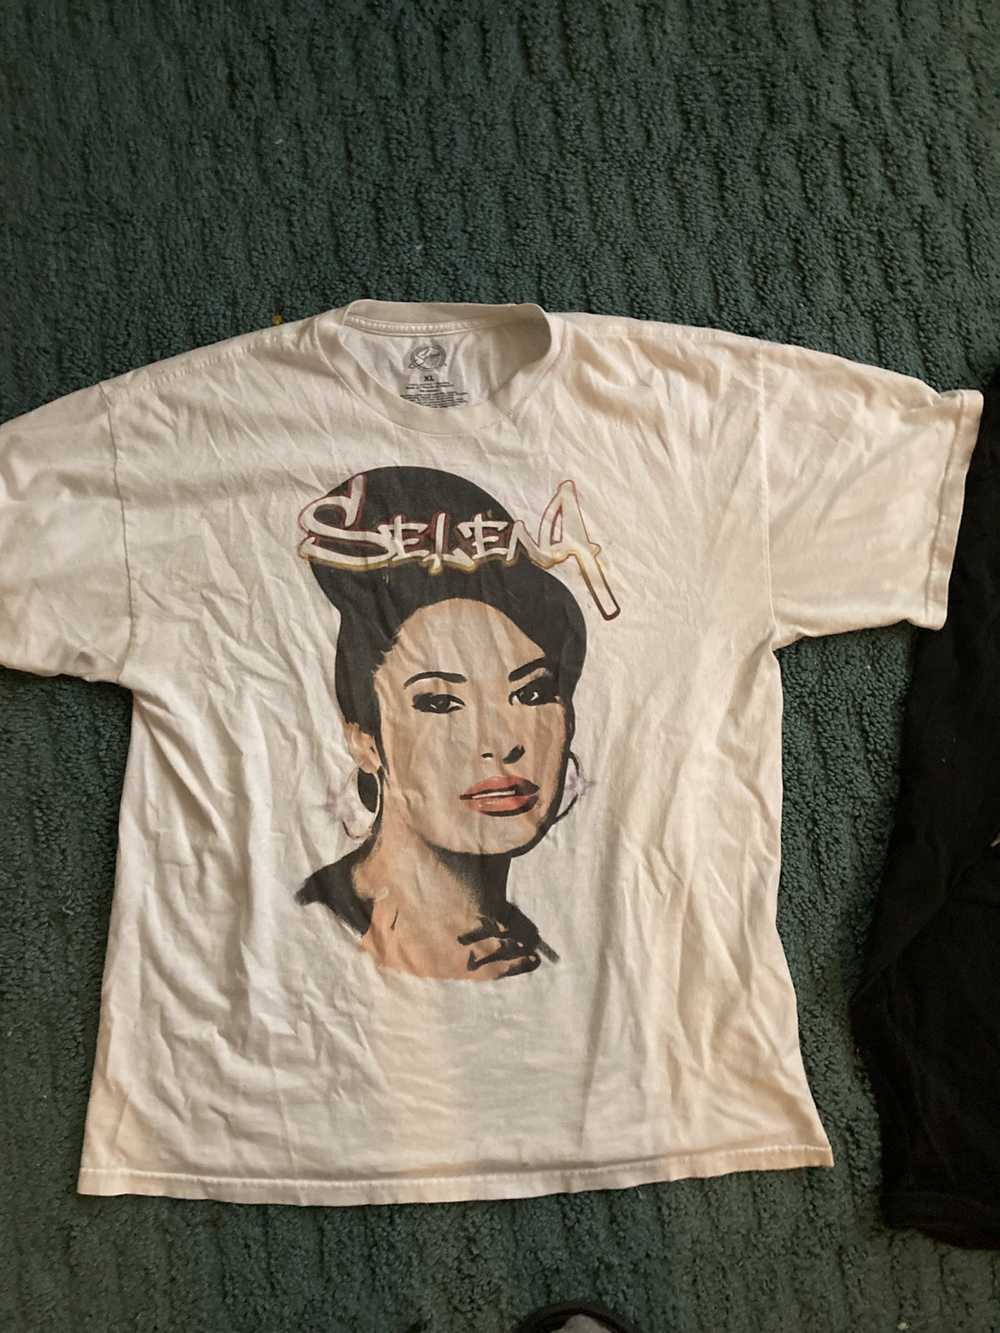 Vintage Selena XL shirt - image 1